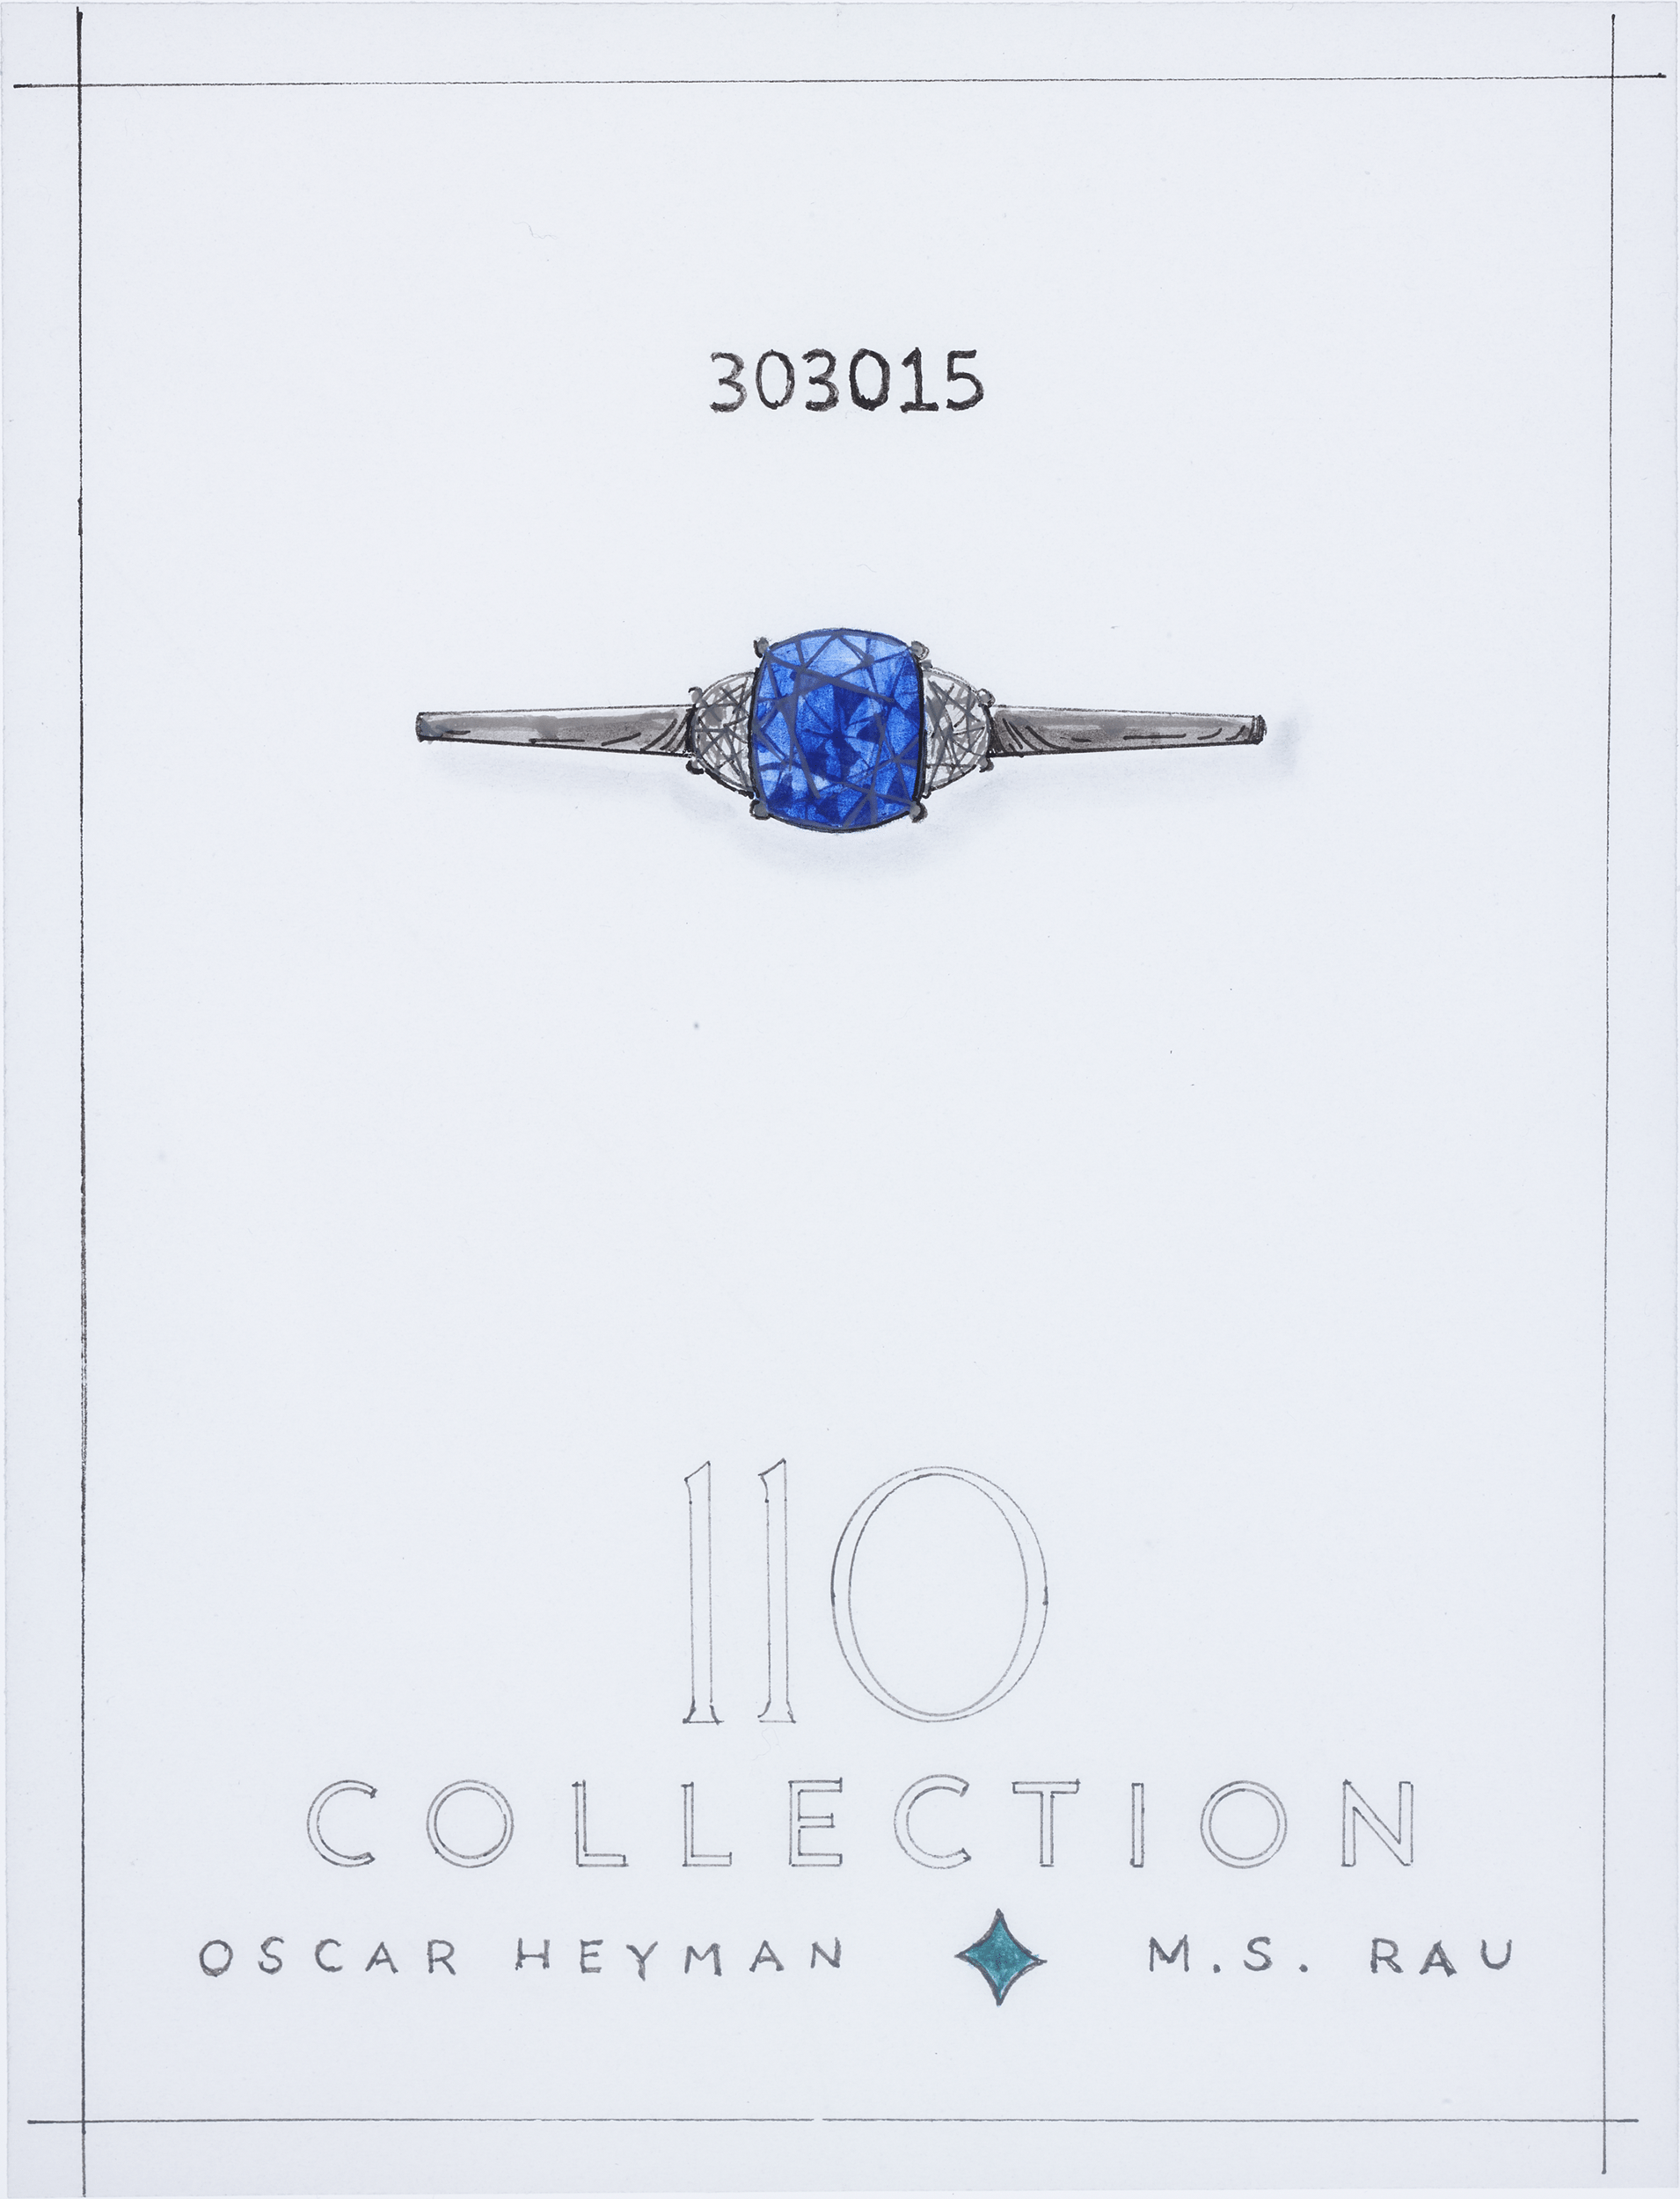 Oscar Heyman Untreated Ceylon Sapphire Ring, 8.53 Carats